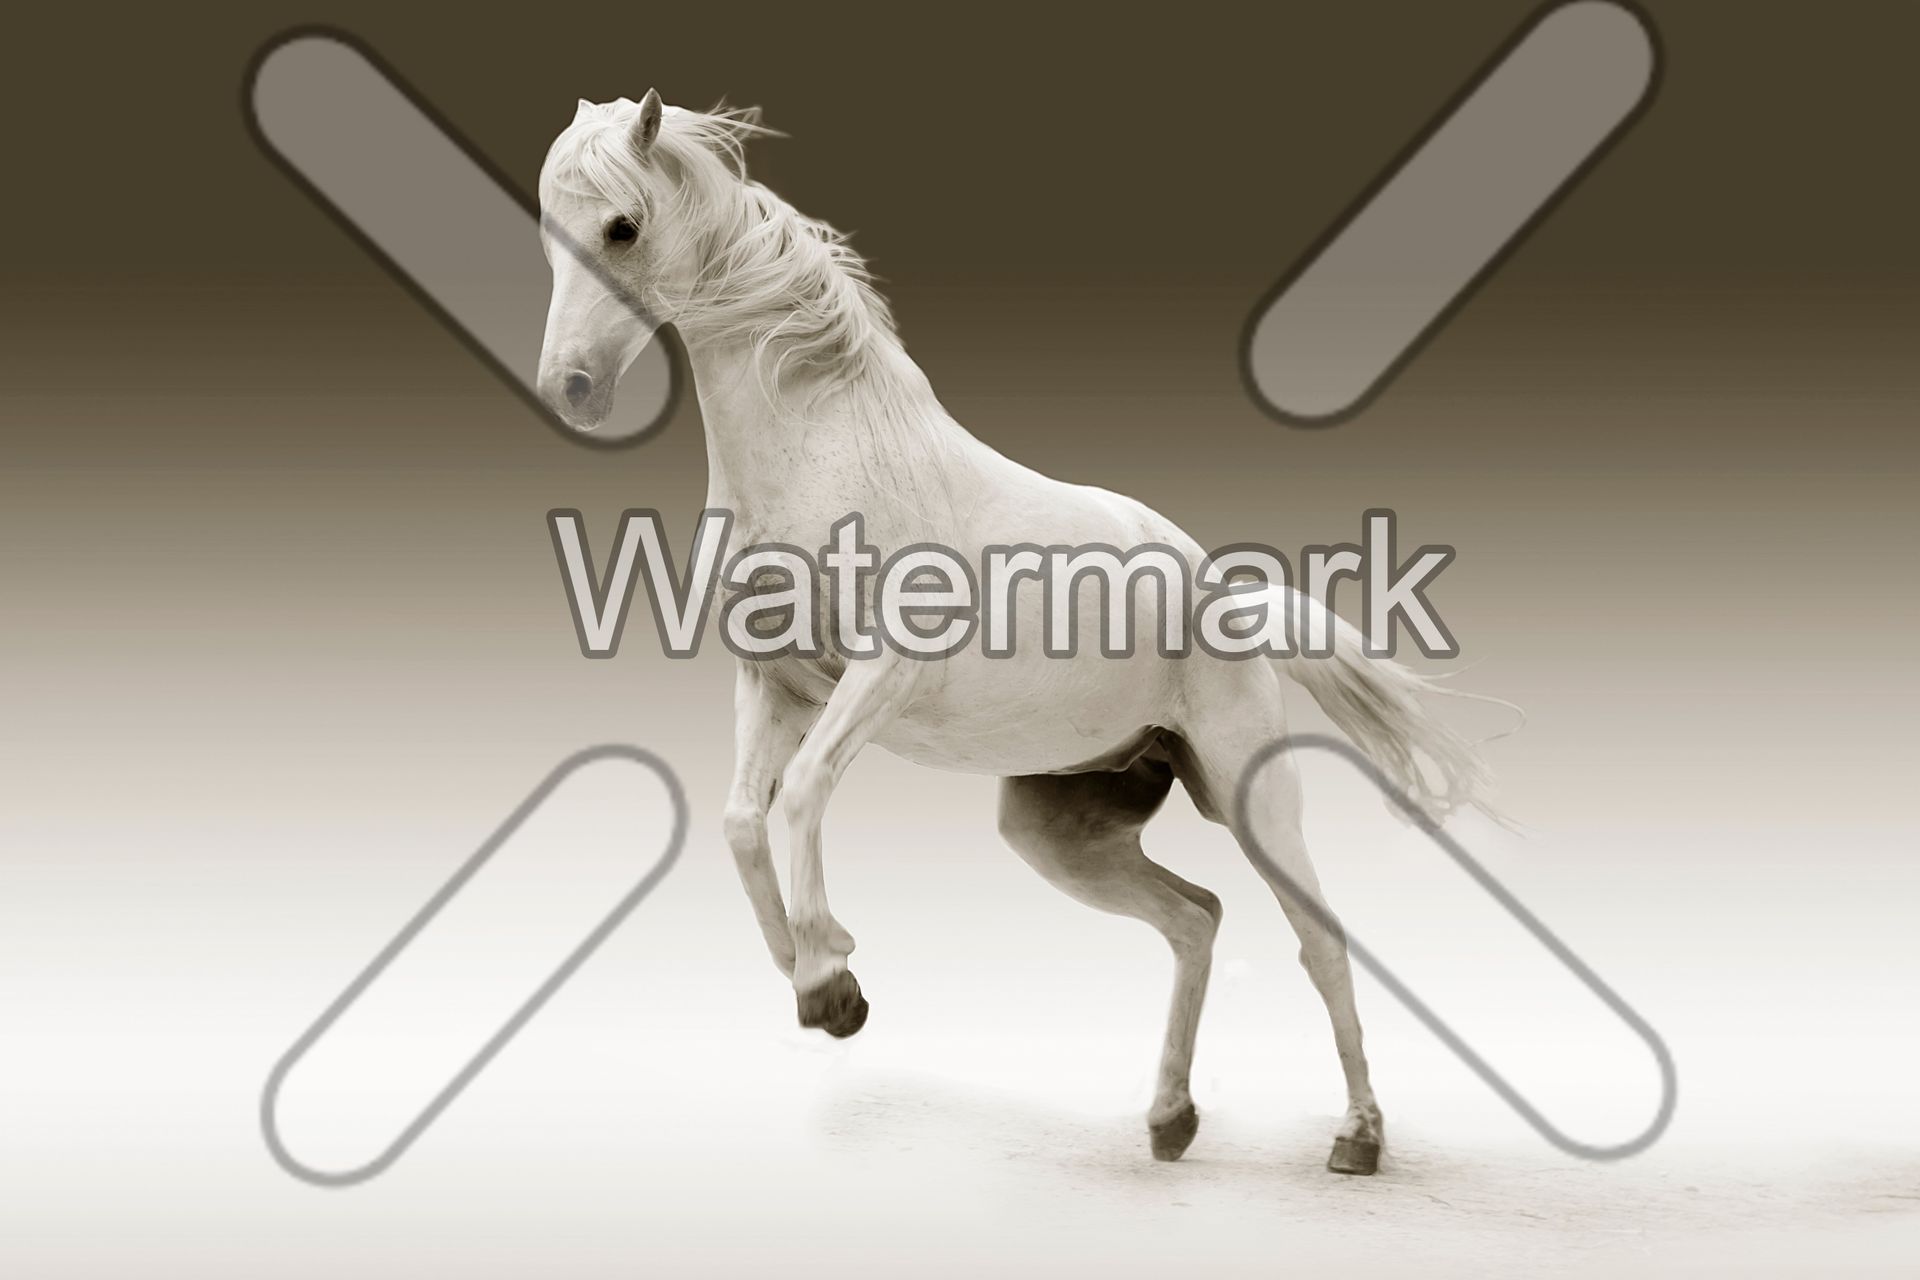 batch photo watermark software